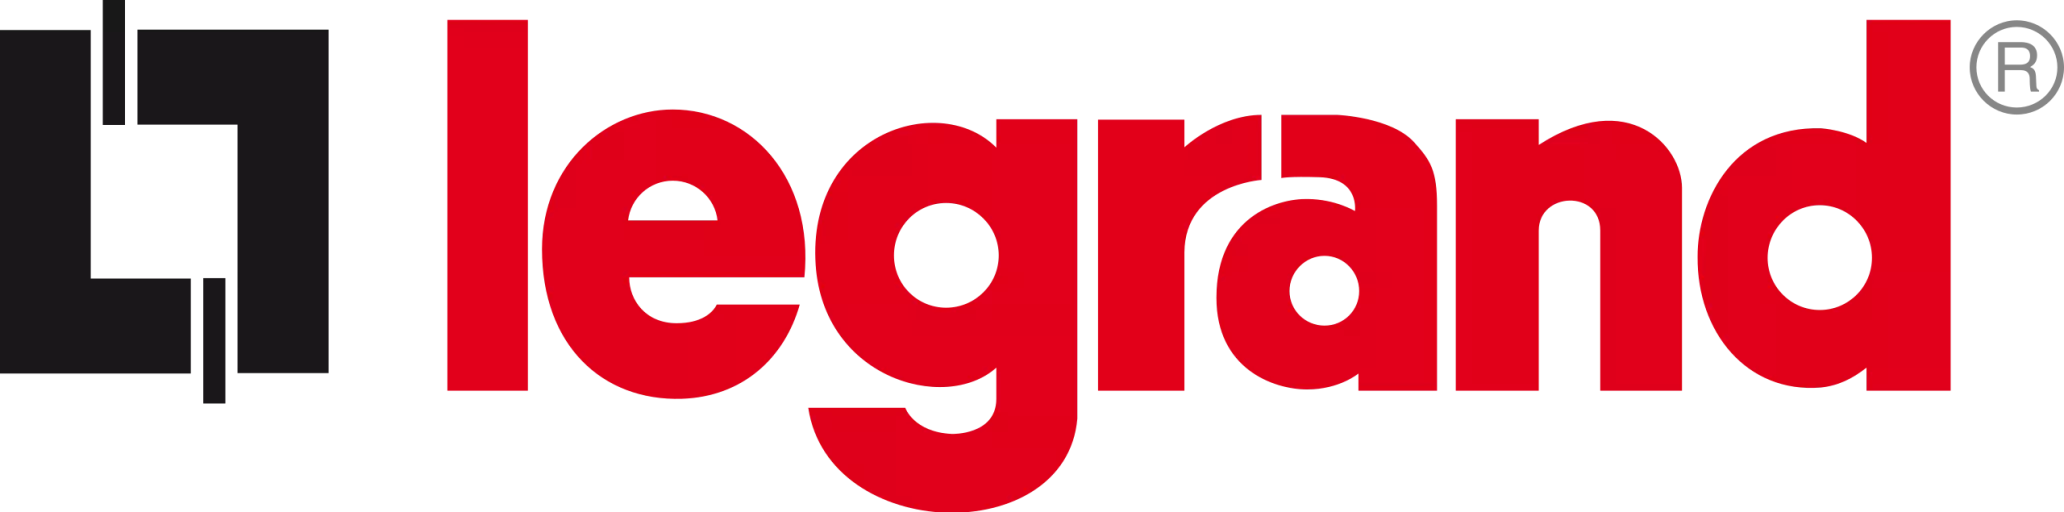 Logo firmy Legrand.